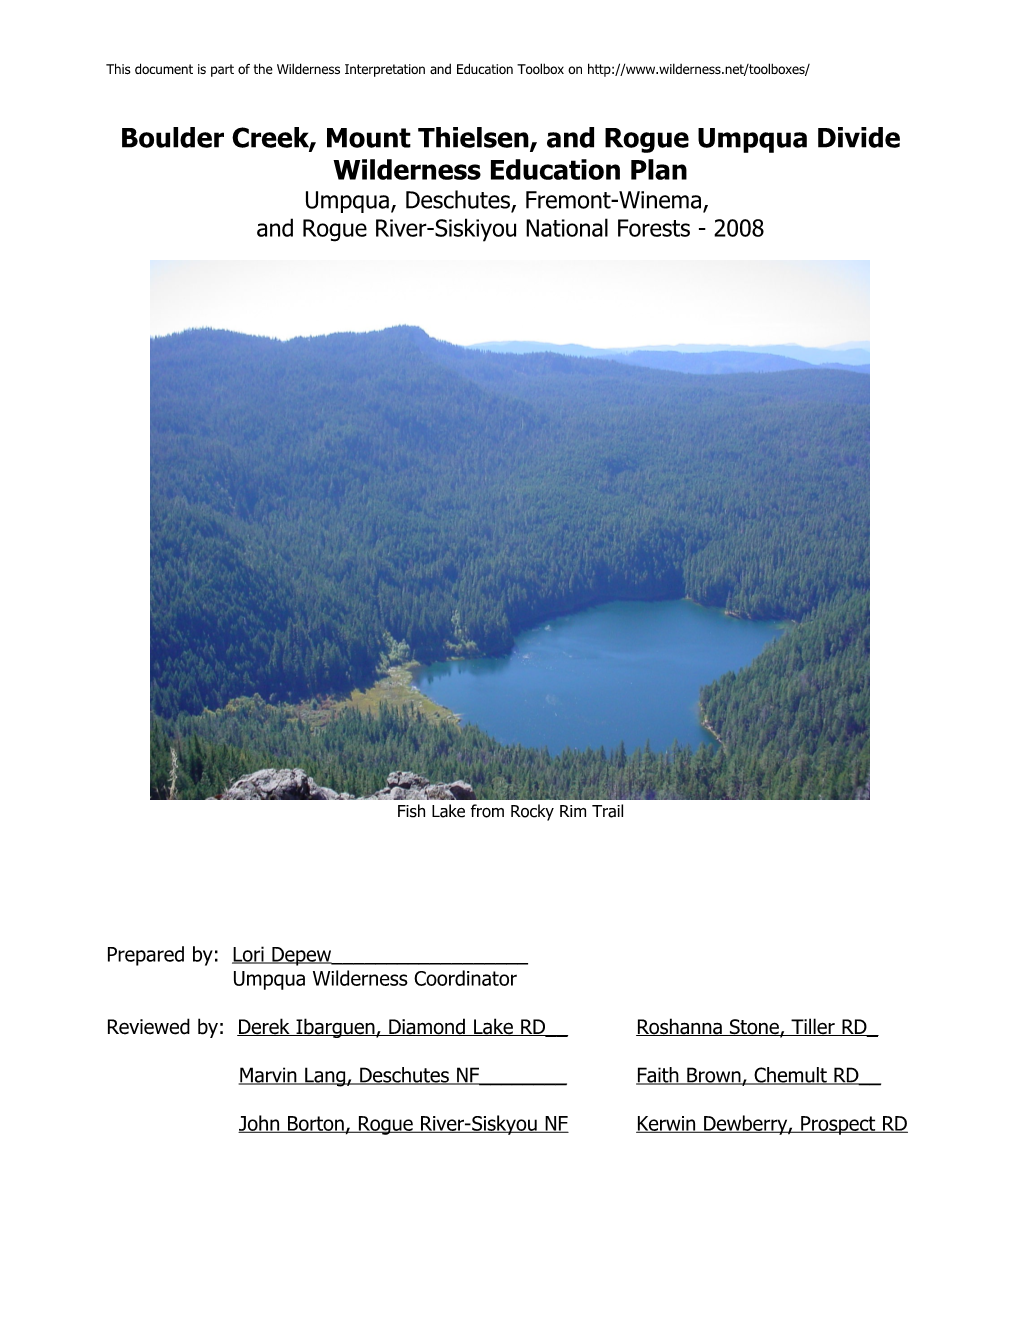 Boulder Creek, Mount Thielsen, and Rogue Umpqua Divide Wilderness Education Plan